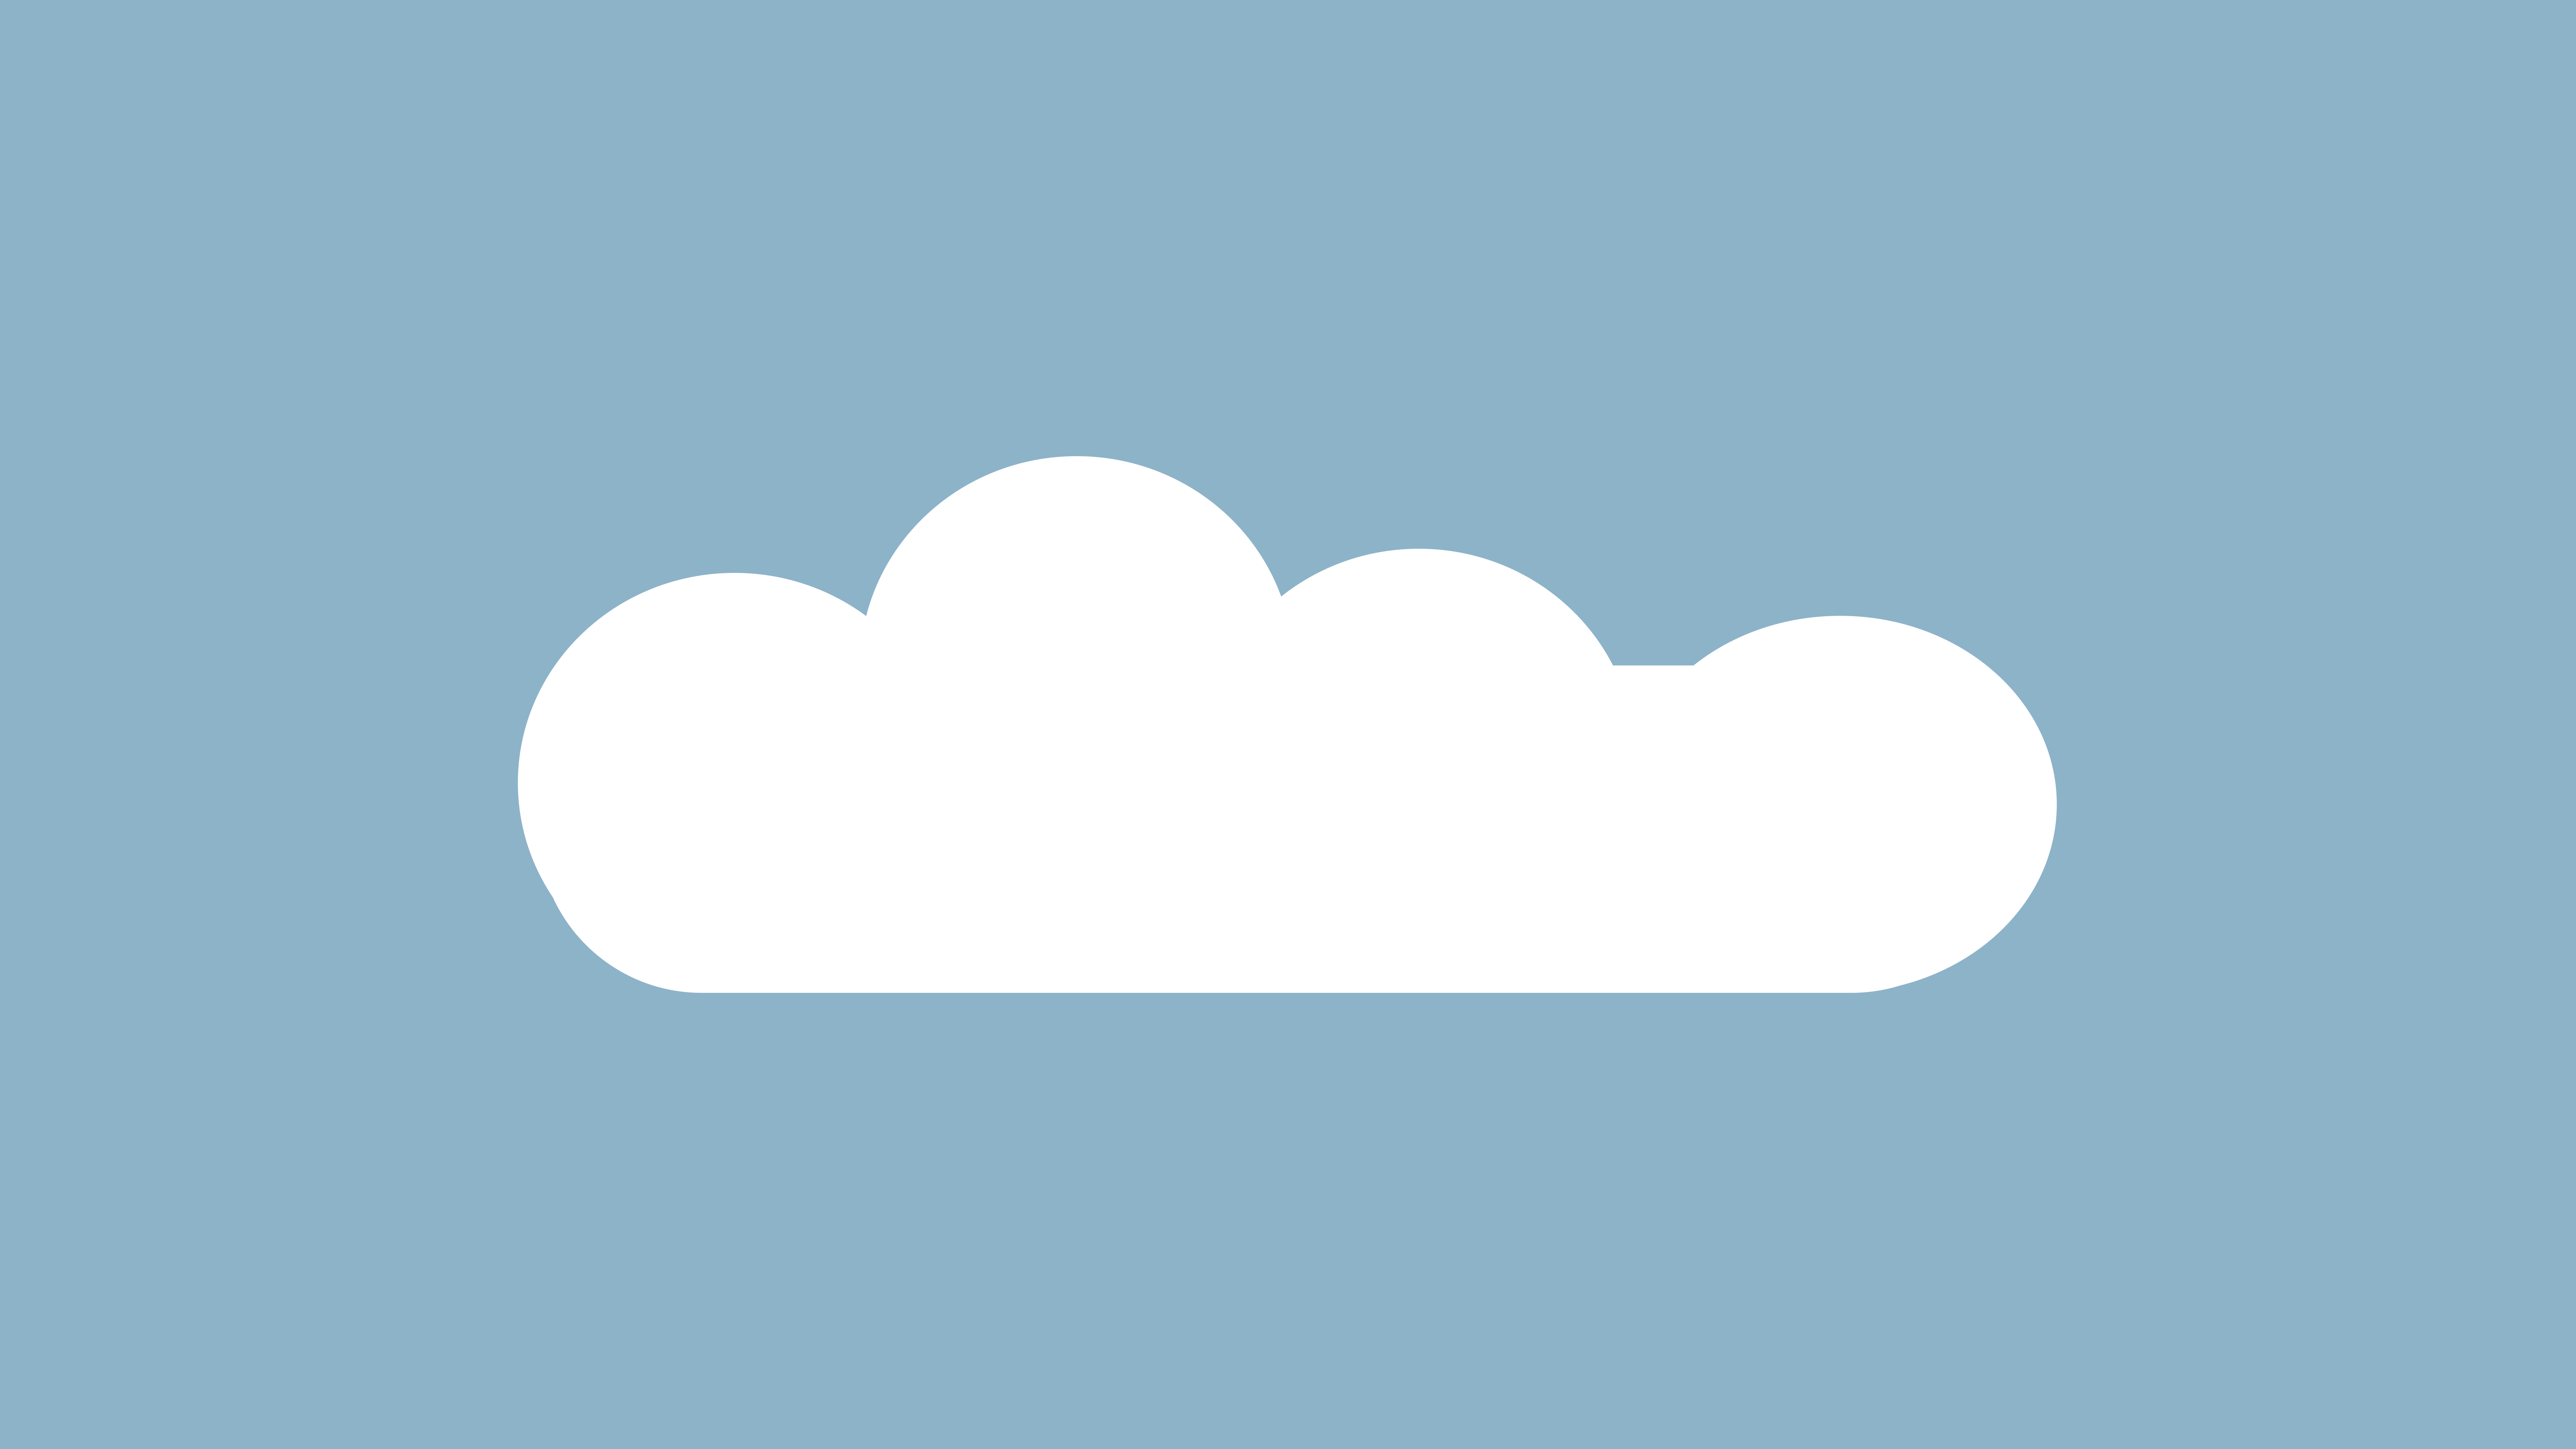 A white cloud on a blue background - Pastel minimalist